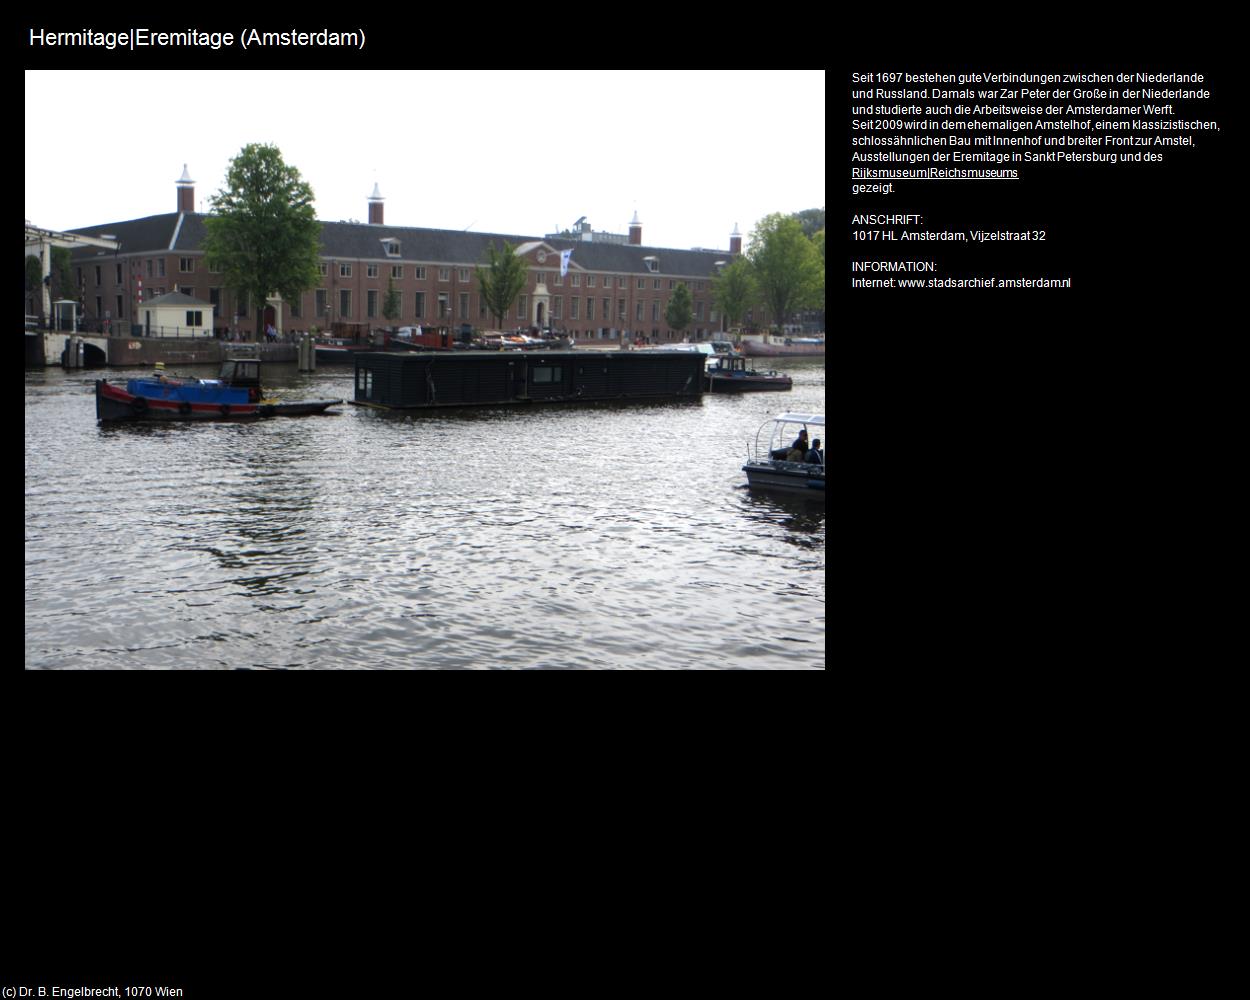 Hermitage|Eremitage (Amsterdam) in Kulturatlas-NIEDERLANDE(c)B.Engelbrecht